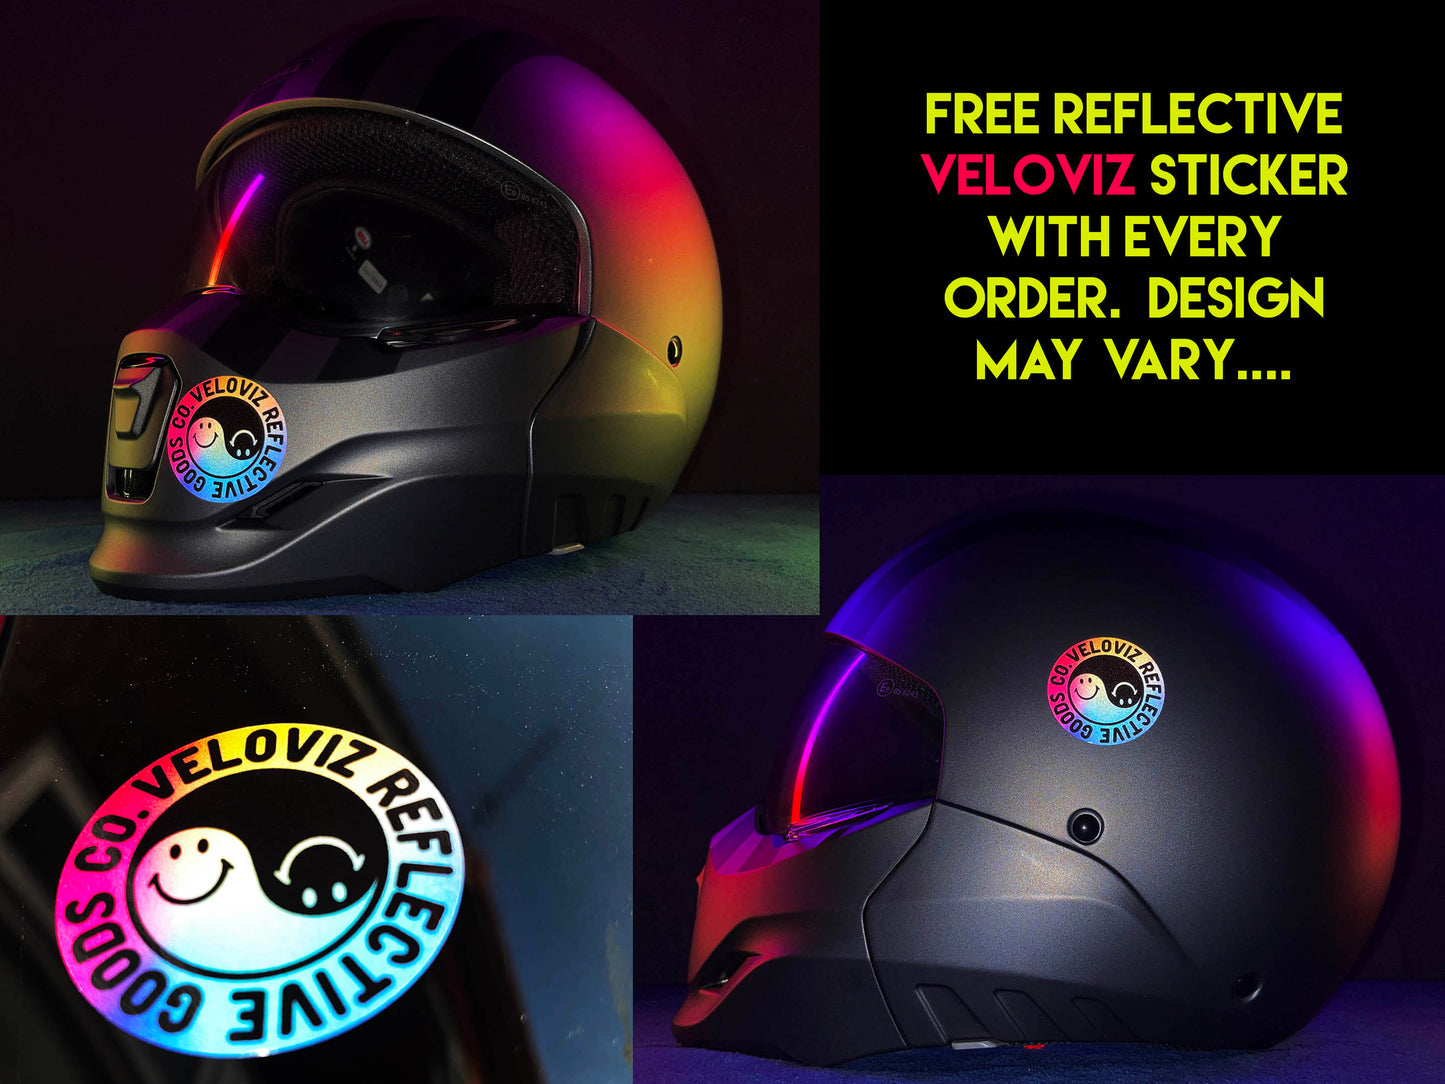 Valueviz Reflective Alien Head (Extra Small) Stickers